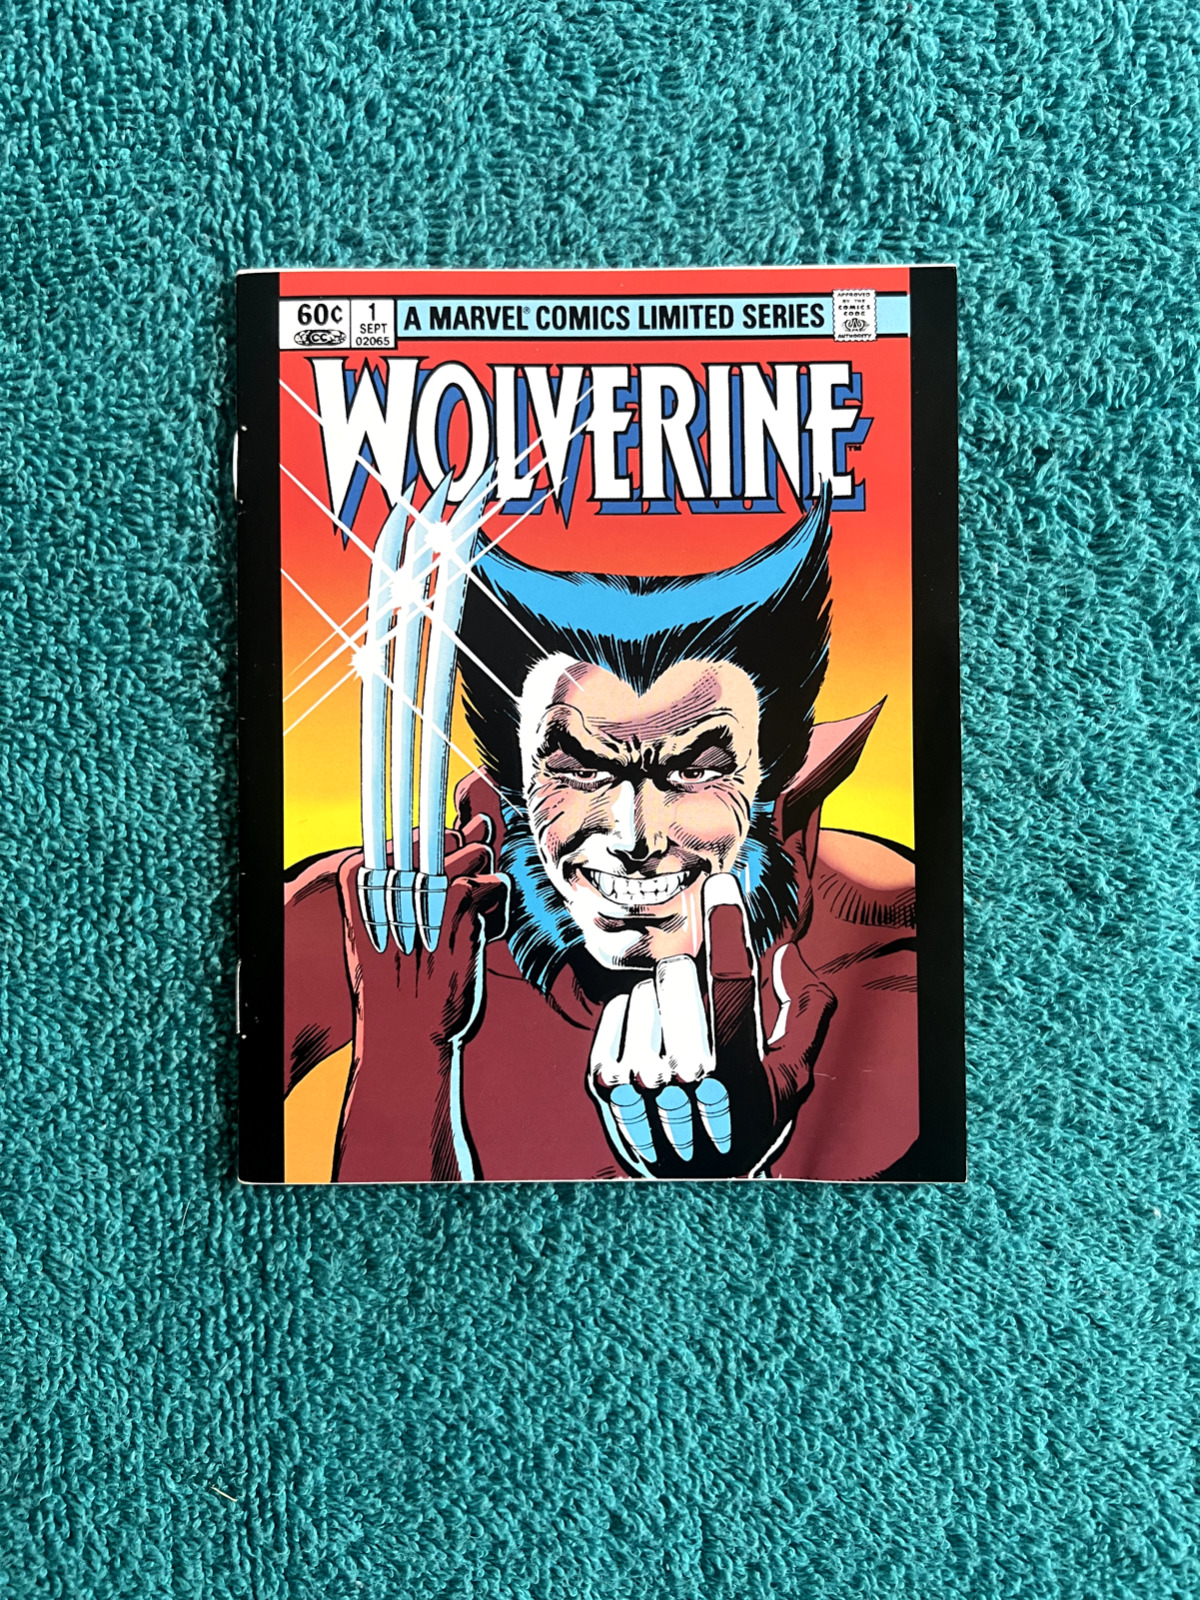 Mini Wolverine #1. 2013 Marvel Very Fine